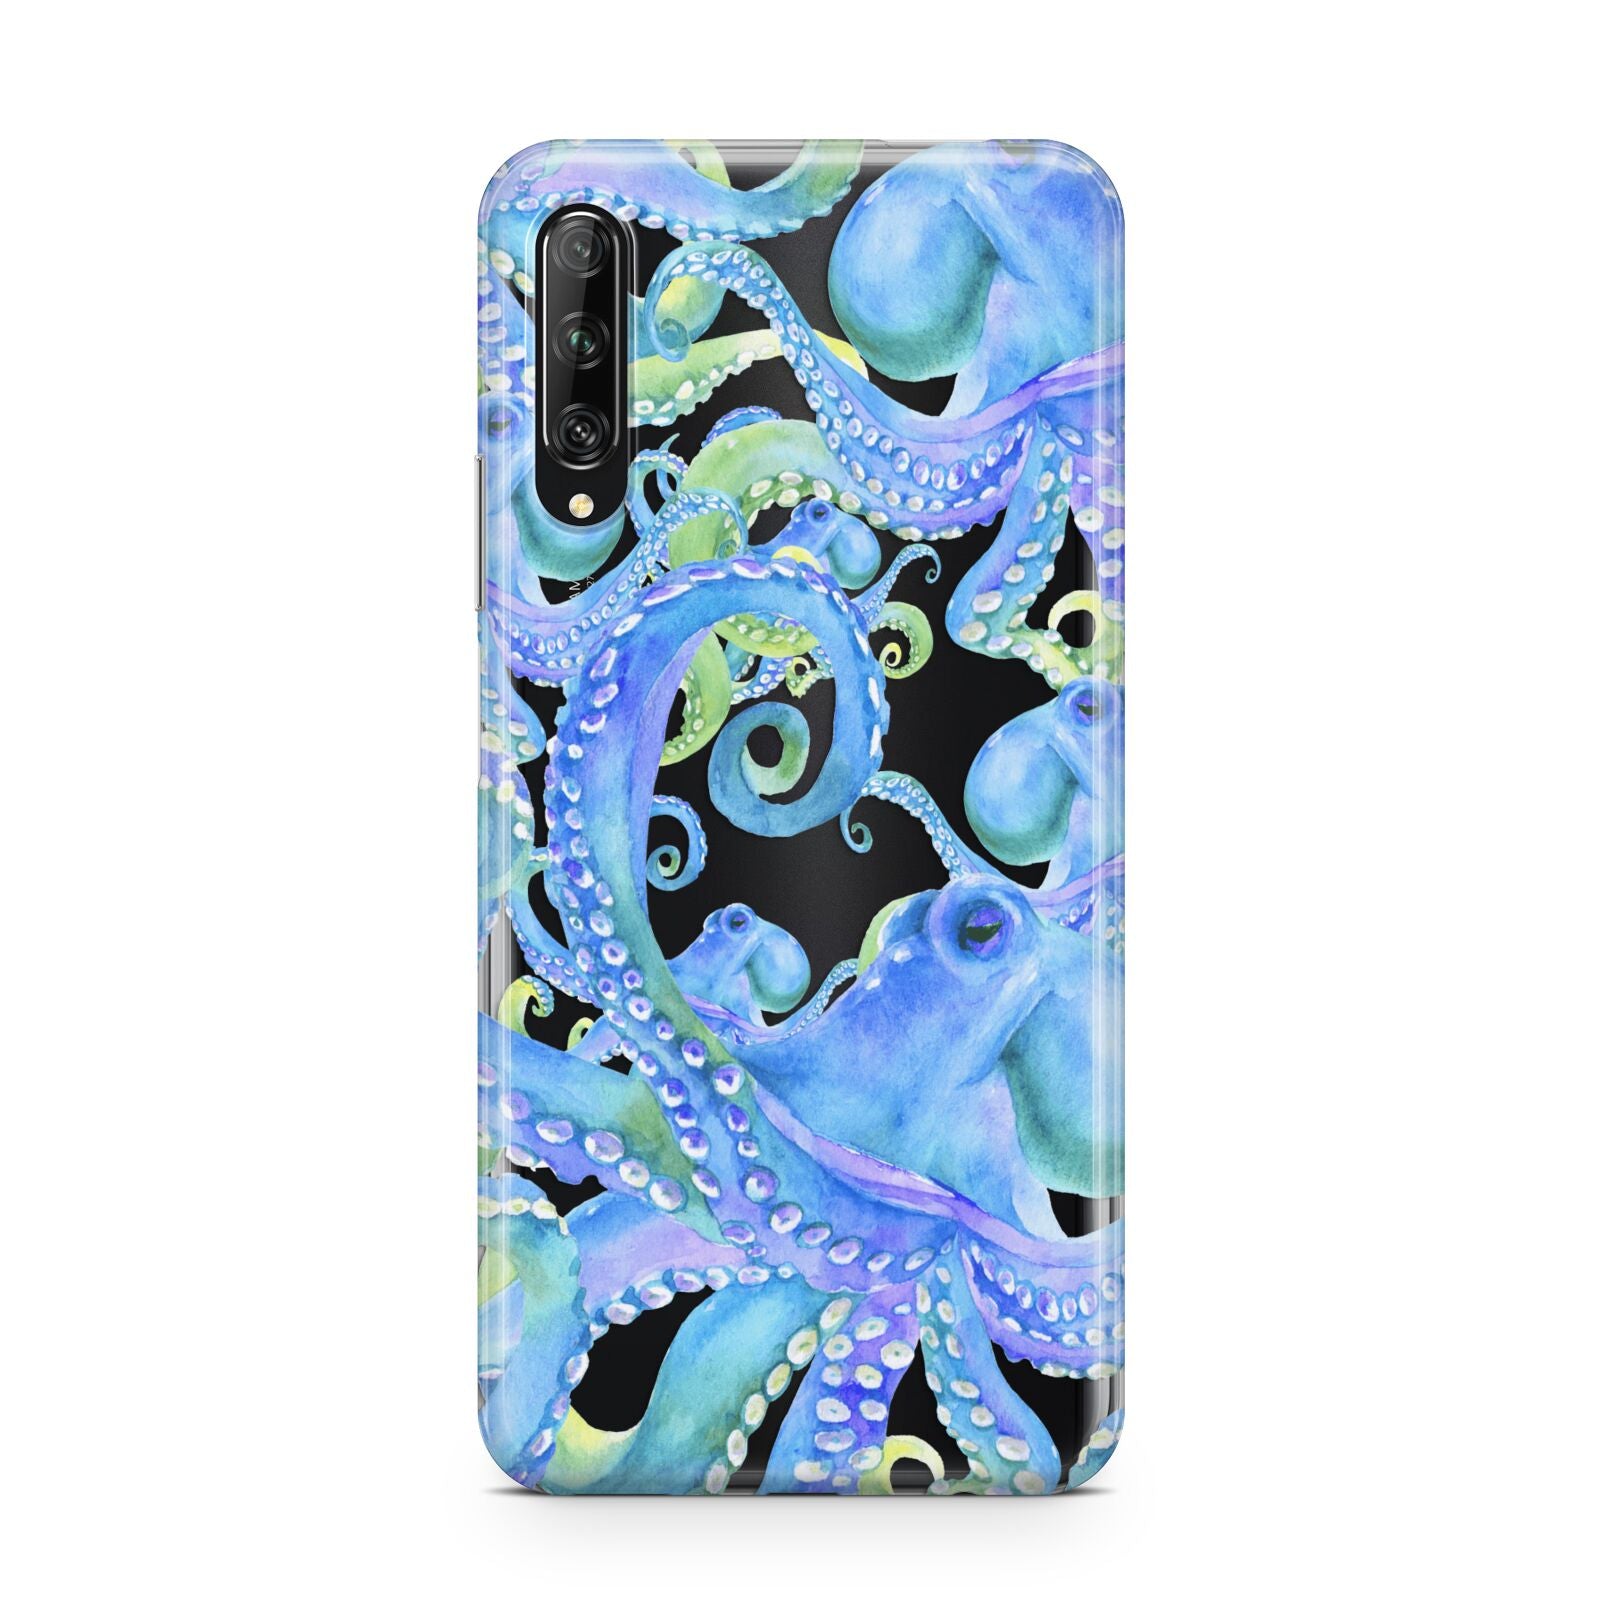 Octopus Huawei P Smart Pro 2019